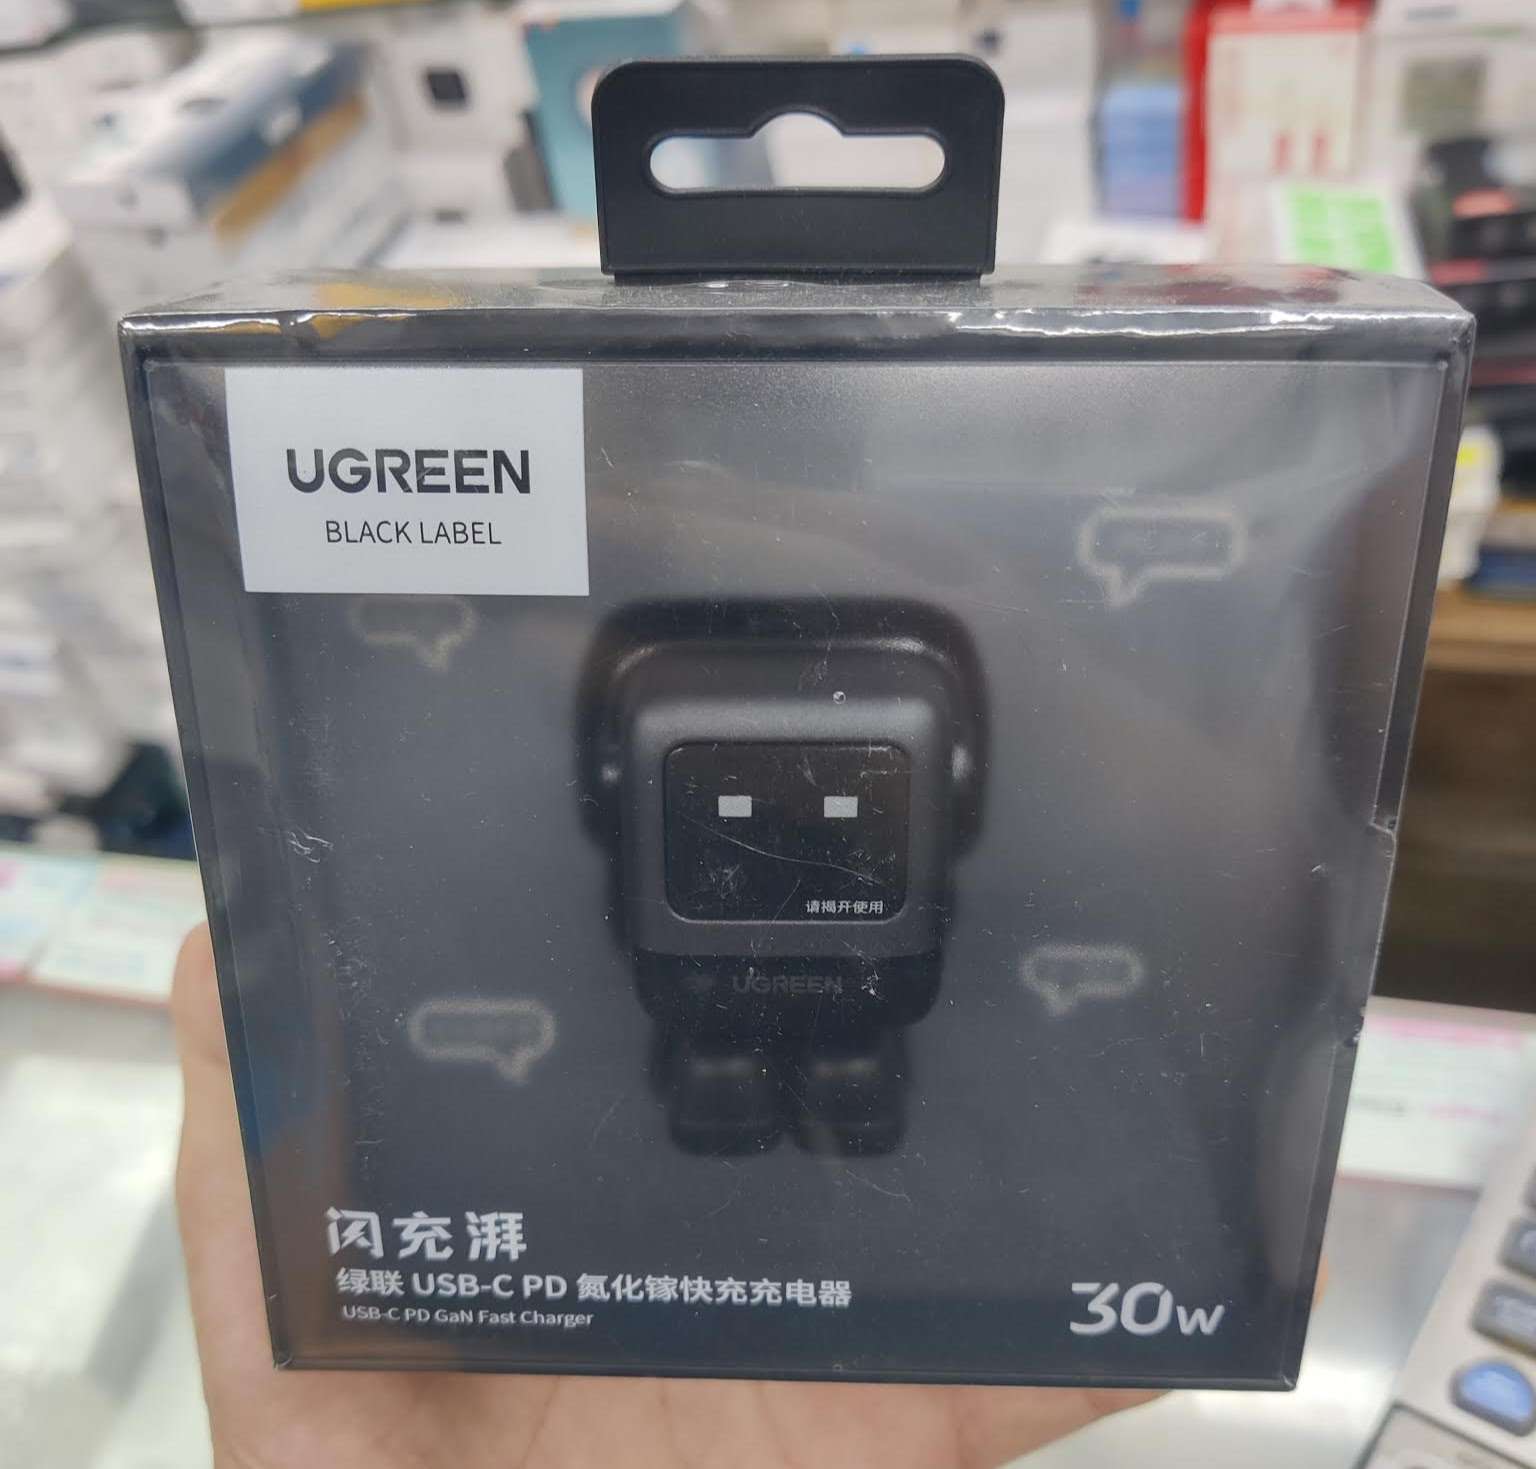 Ugreen Robot 30W USB-C GaN Fast Charger